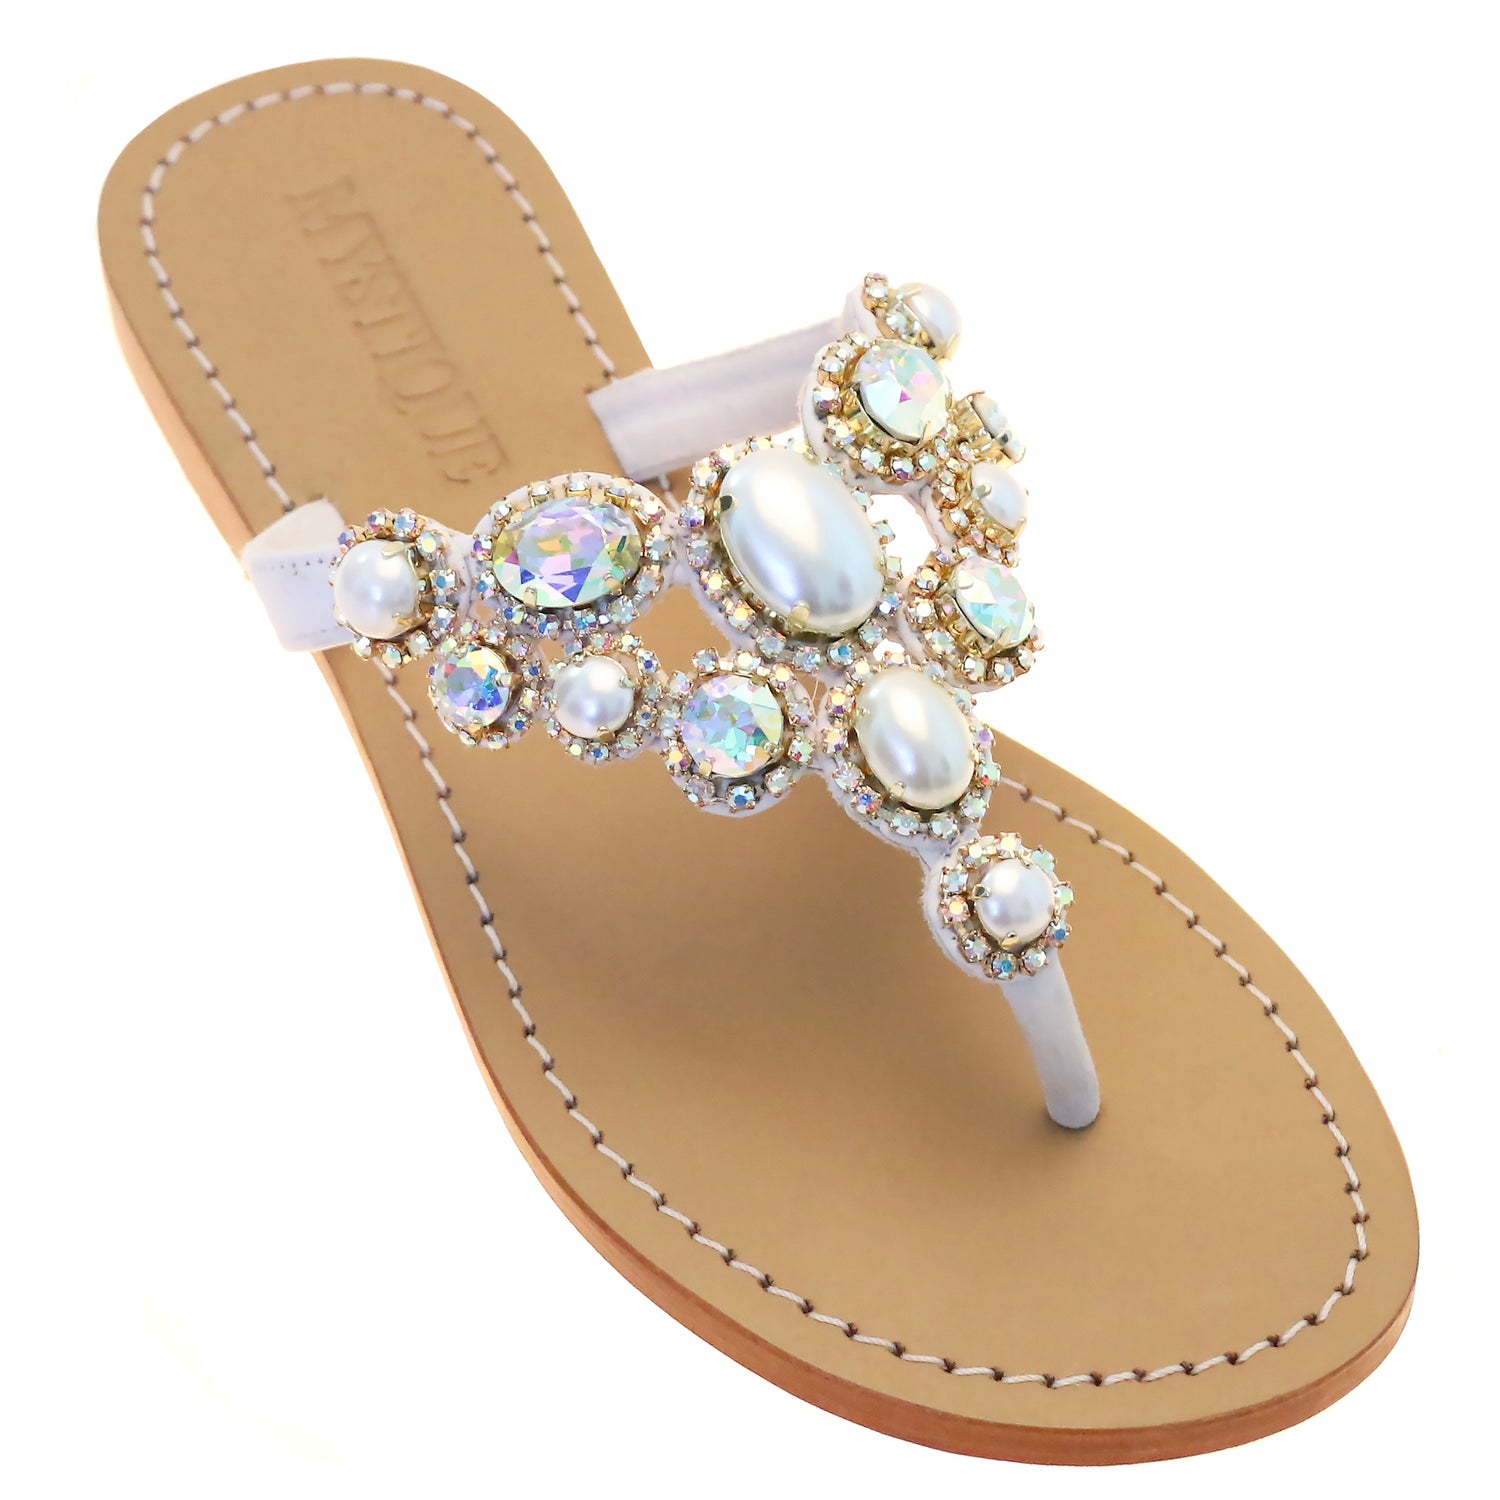 Hoya - Women's Leather Jeweled Sandals | Mystique Sandals